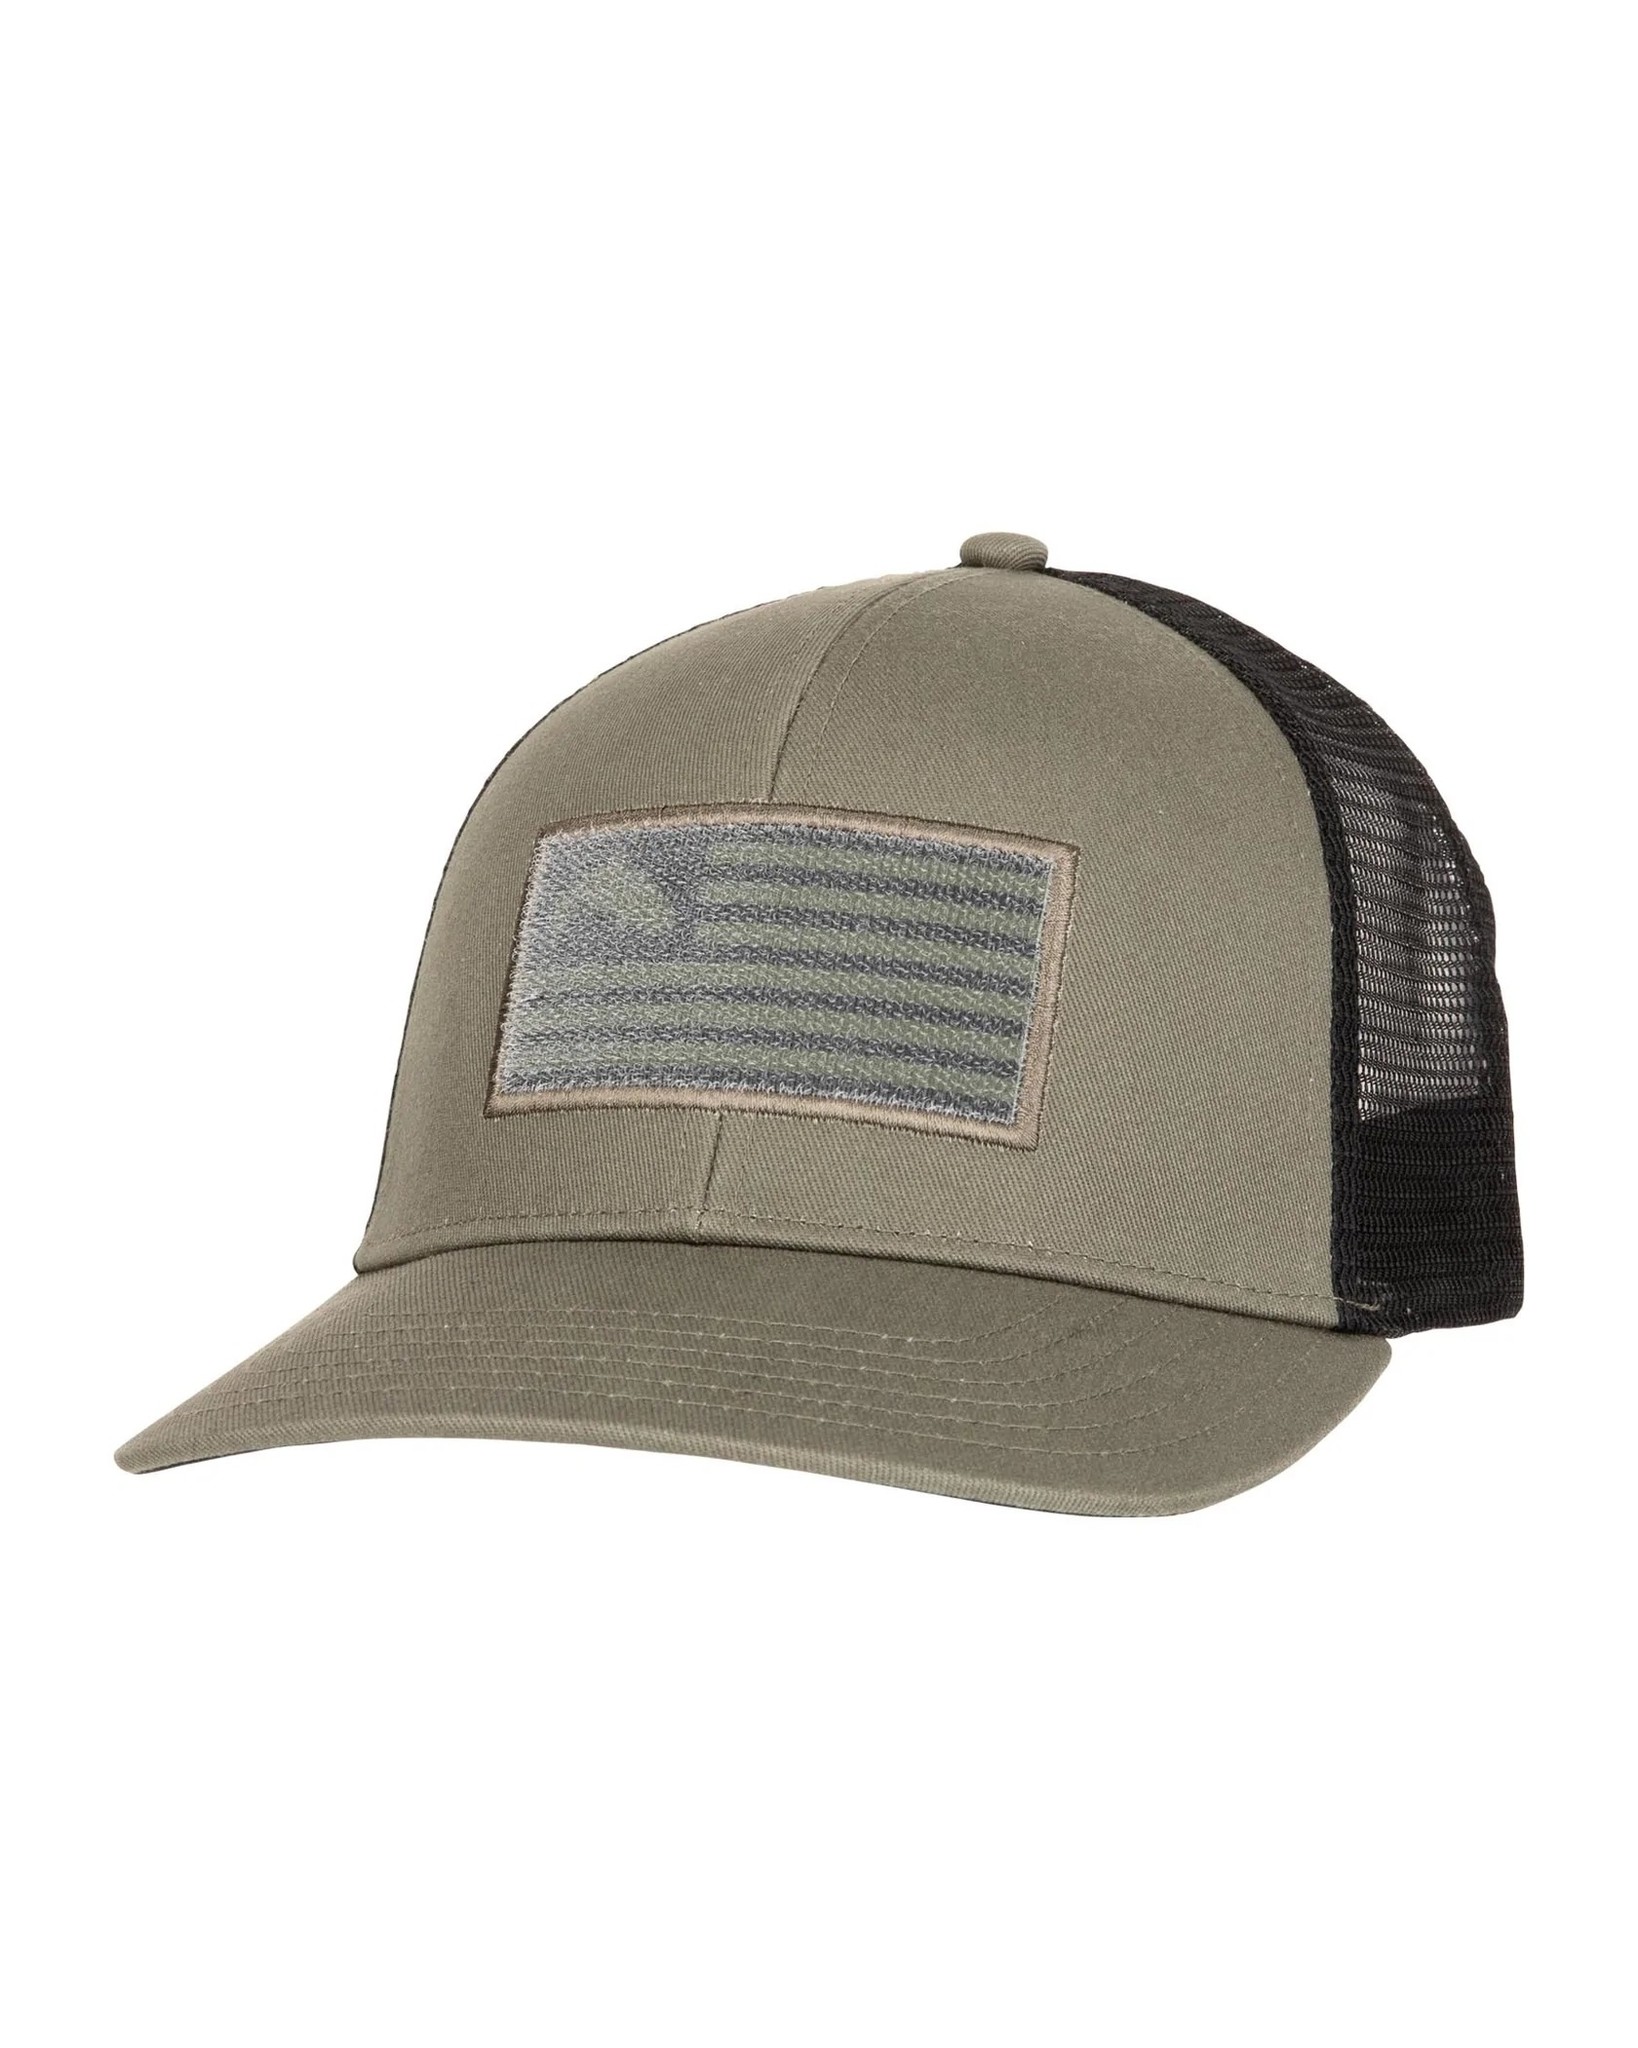 Simms Visor Cap riparian americana, Caps and Hats, Headwear, Clothing